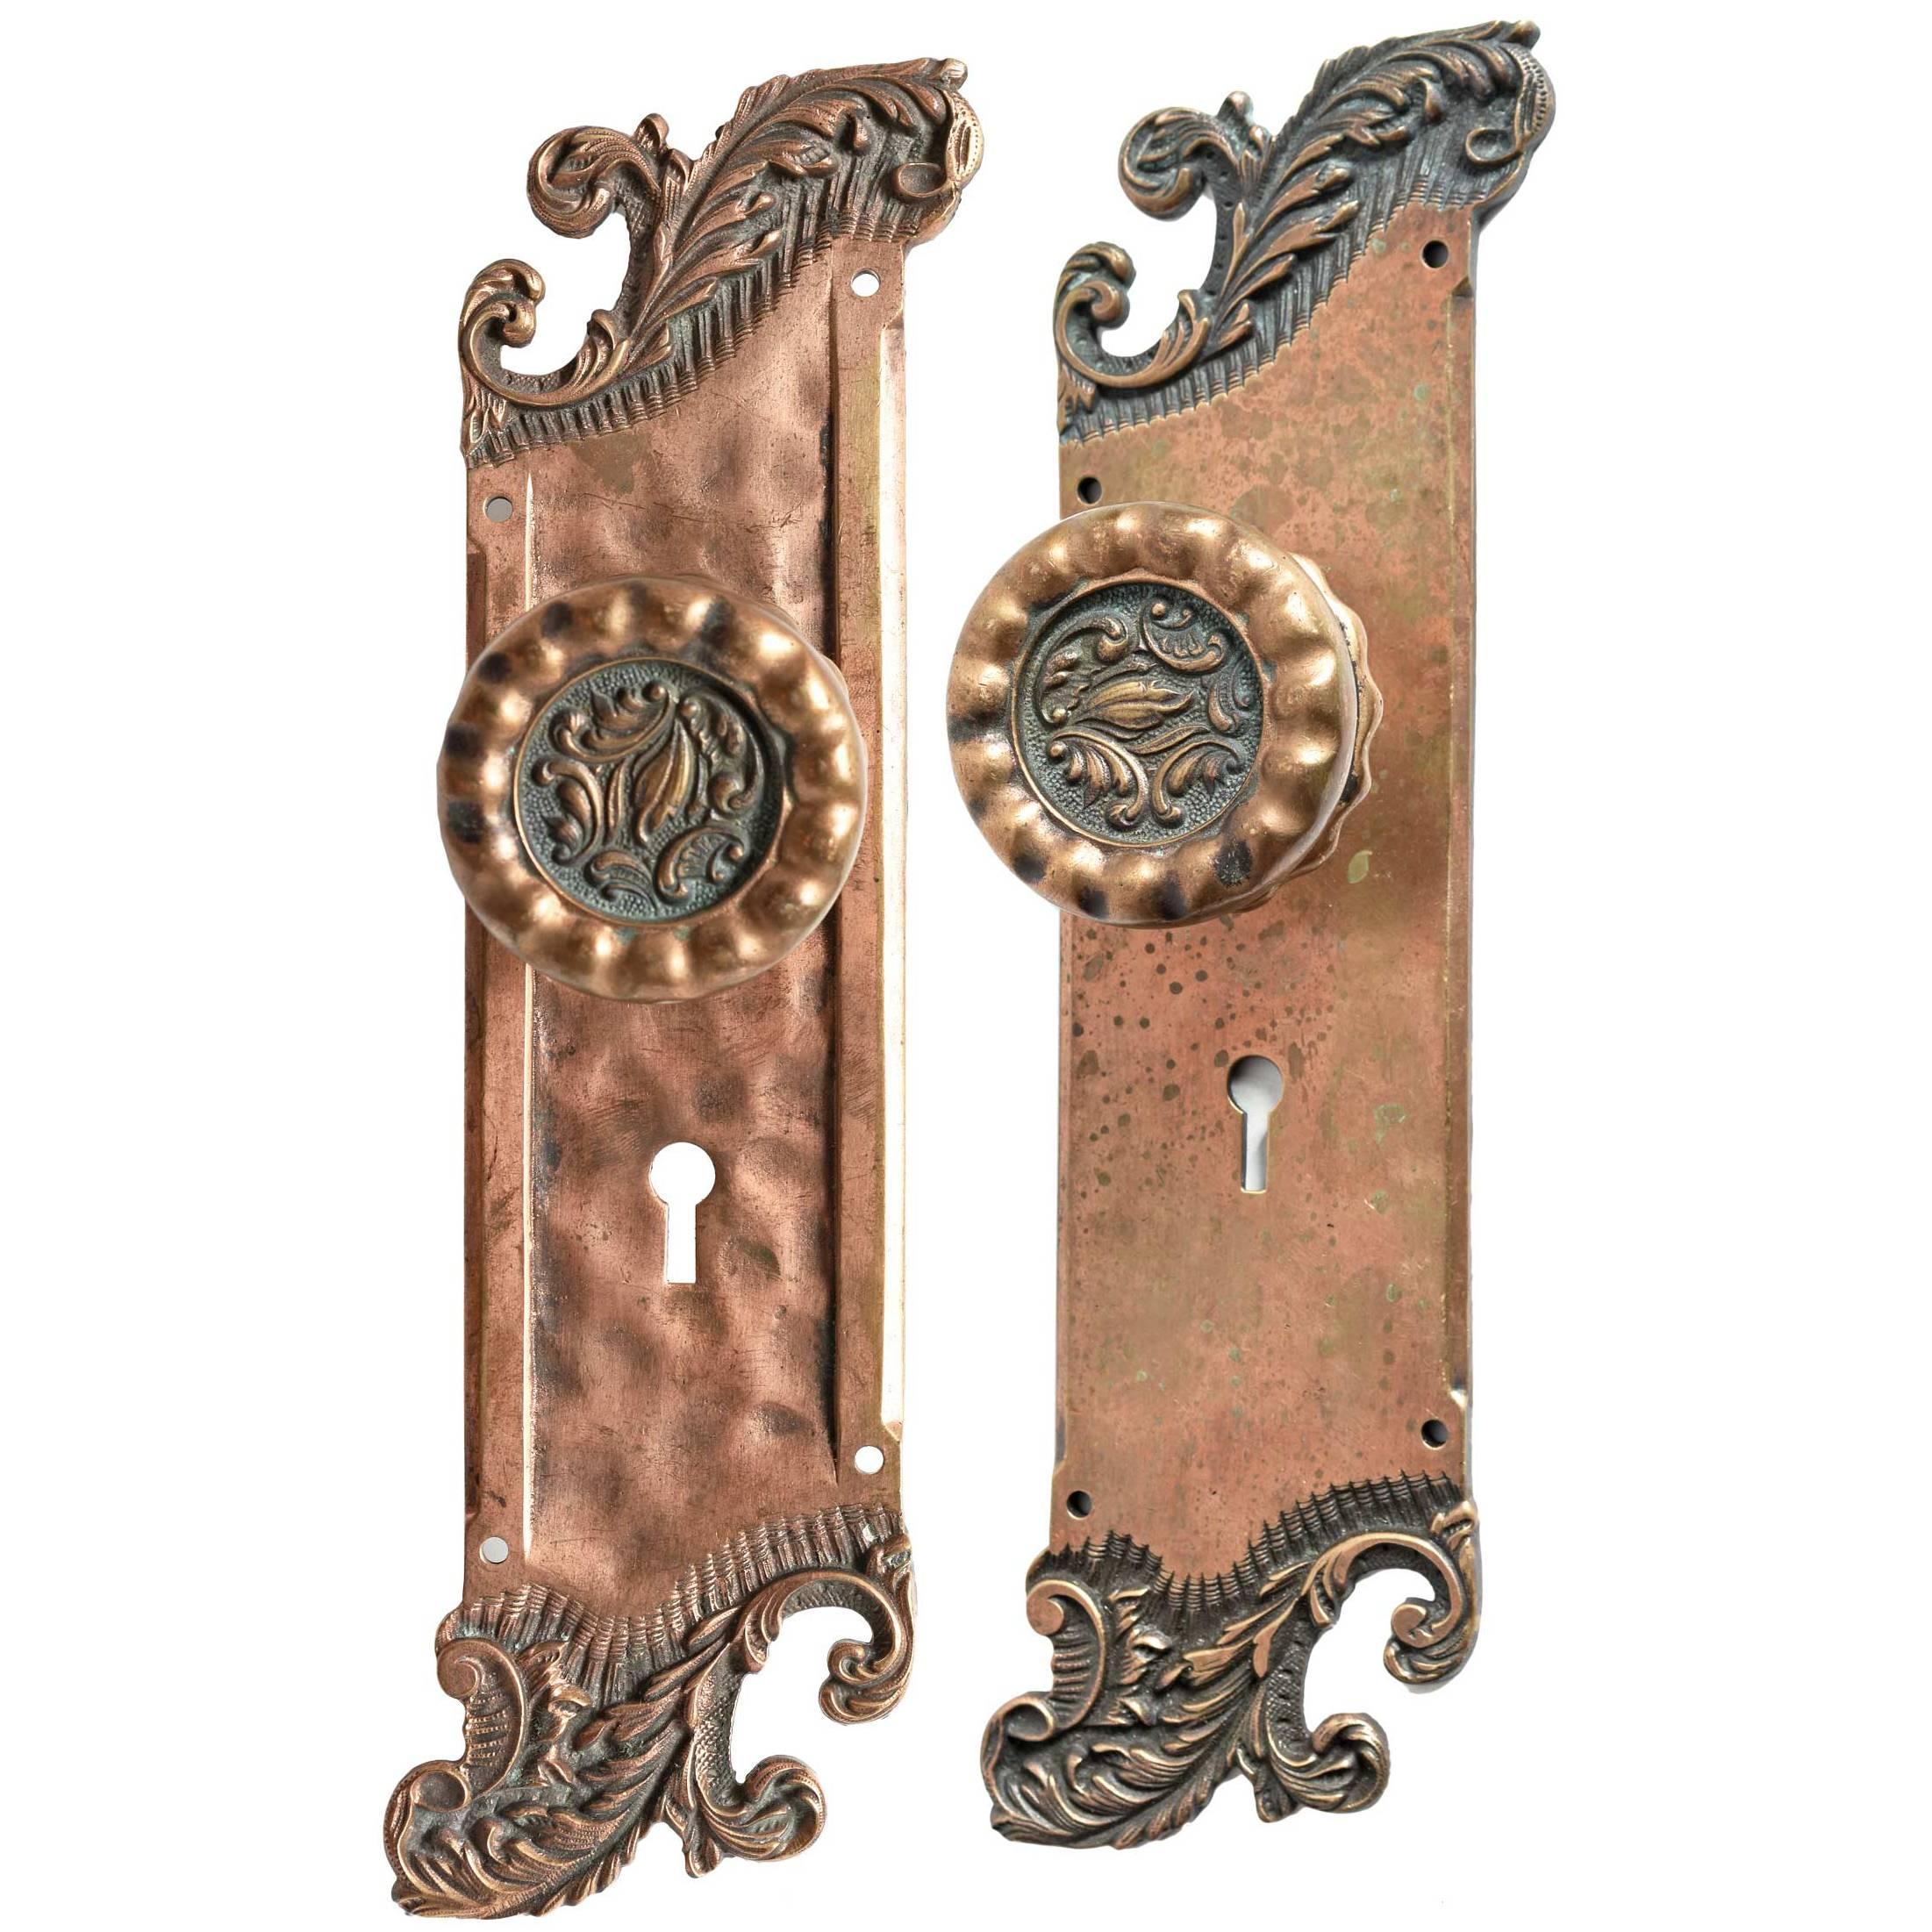 Cast Bronze Reading Hardware Company Entry Doorknob Set, circa 1905